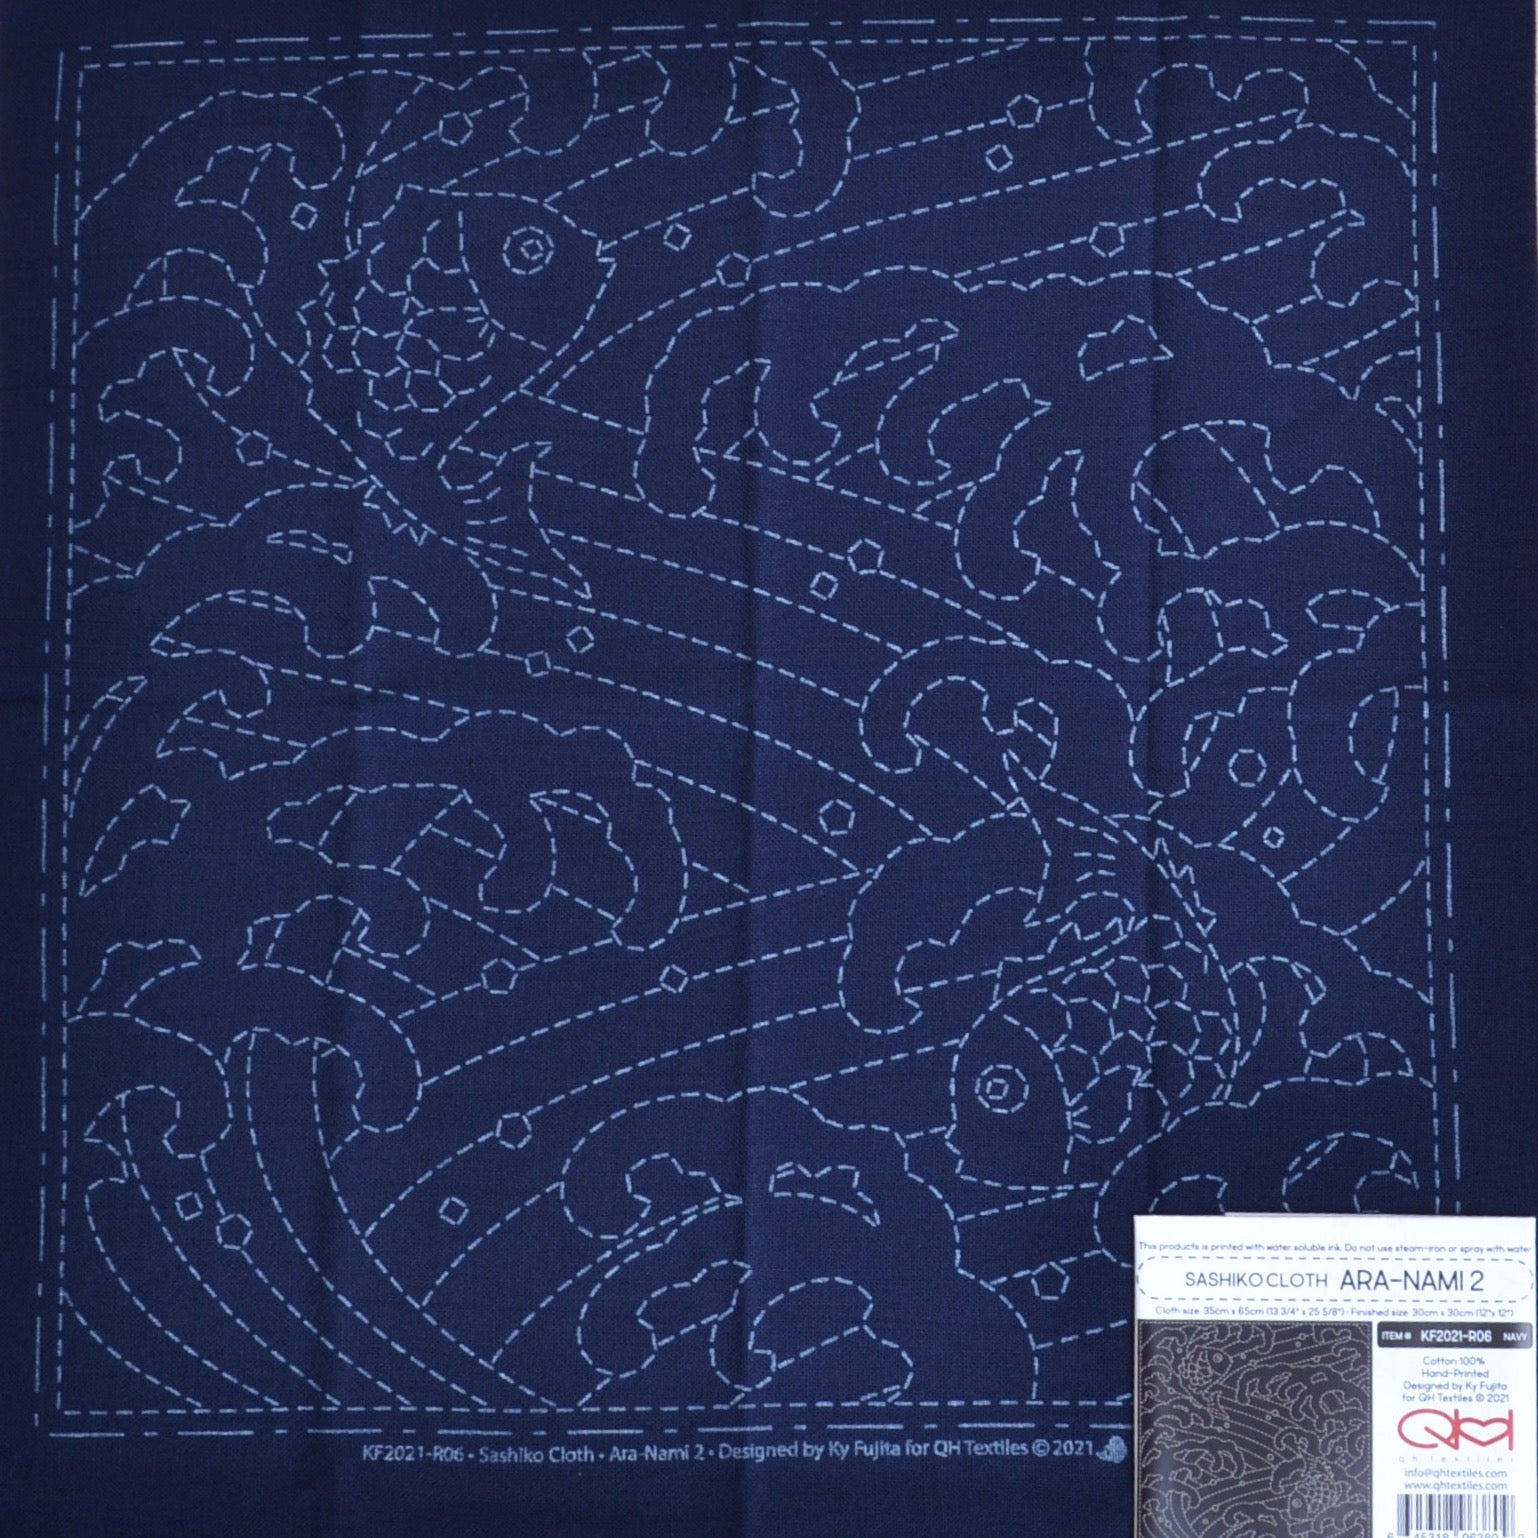 Pre printed ready to stitch sashiko cloth, waves with fish